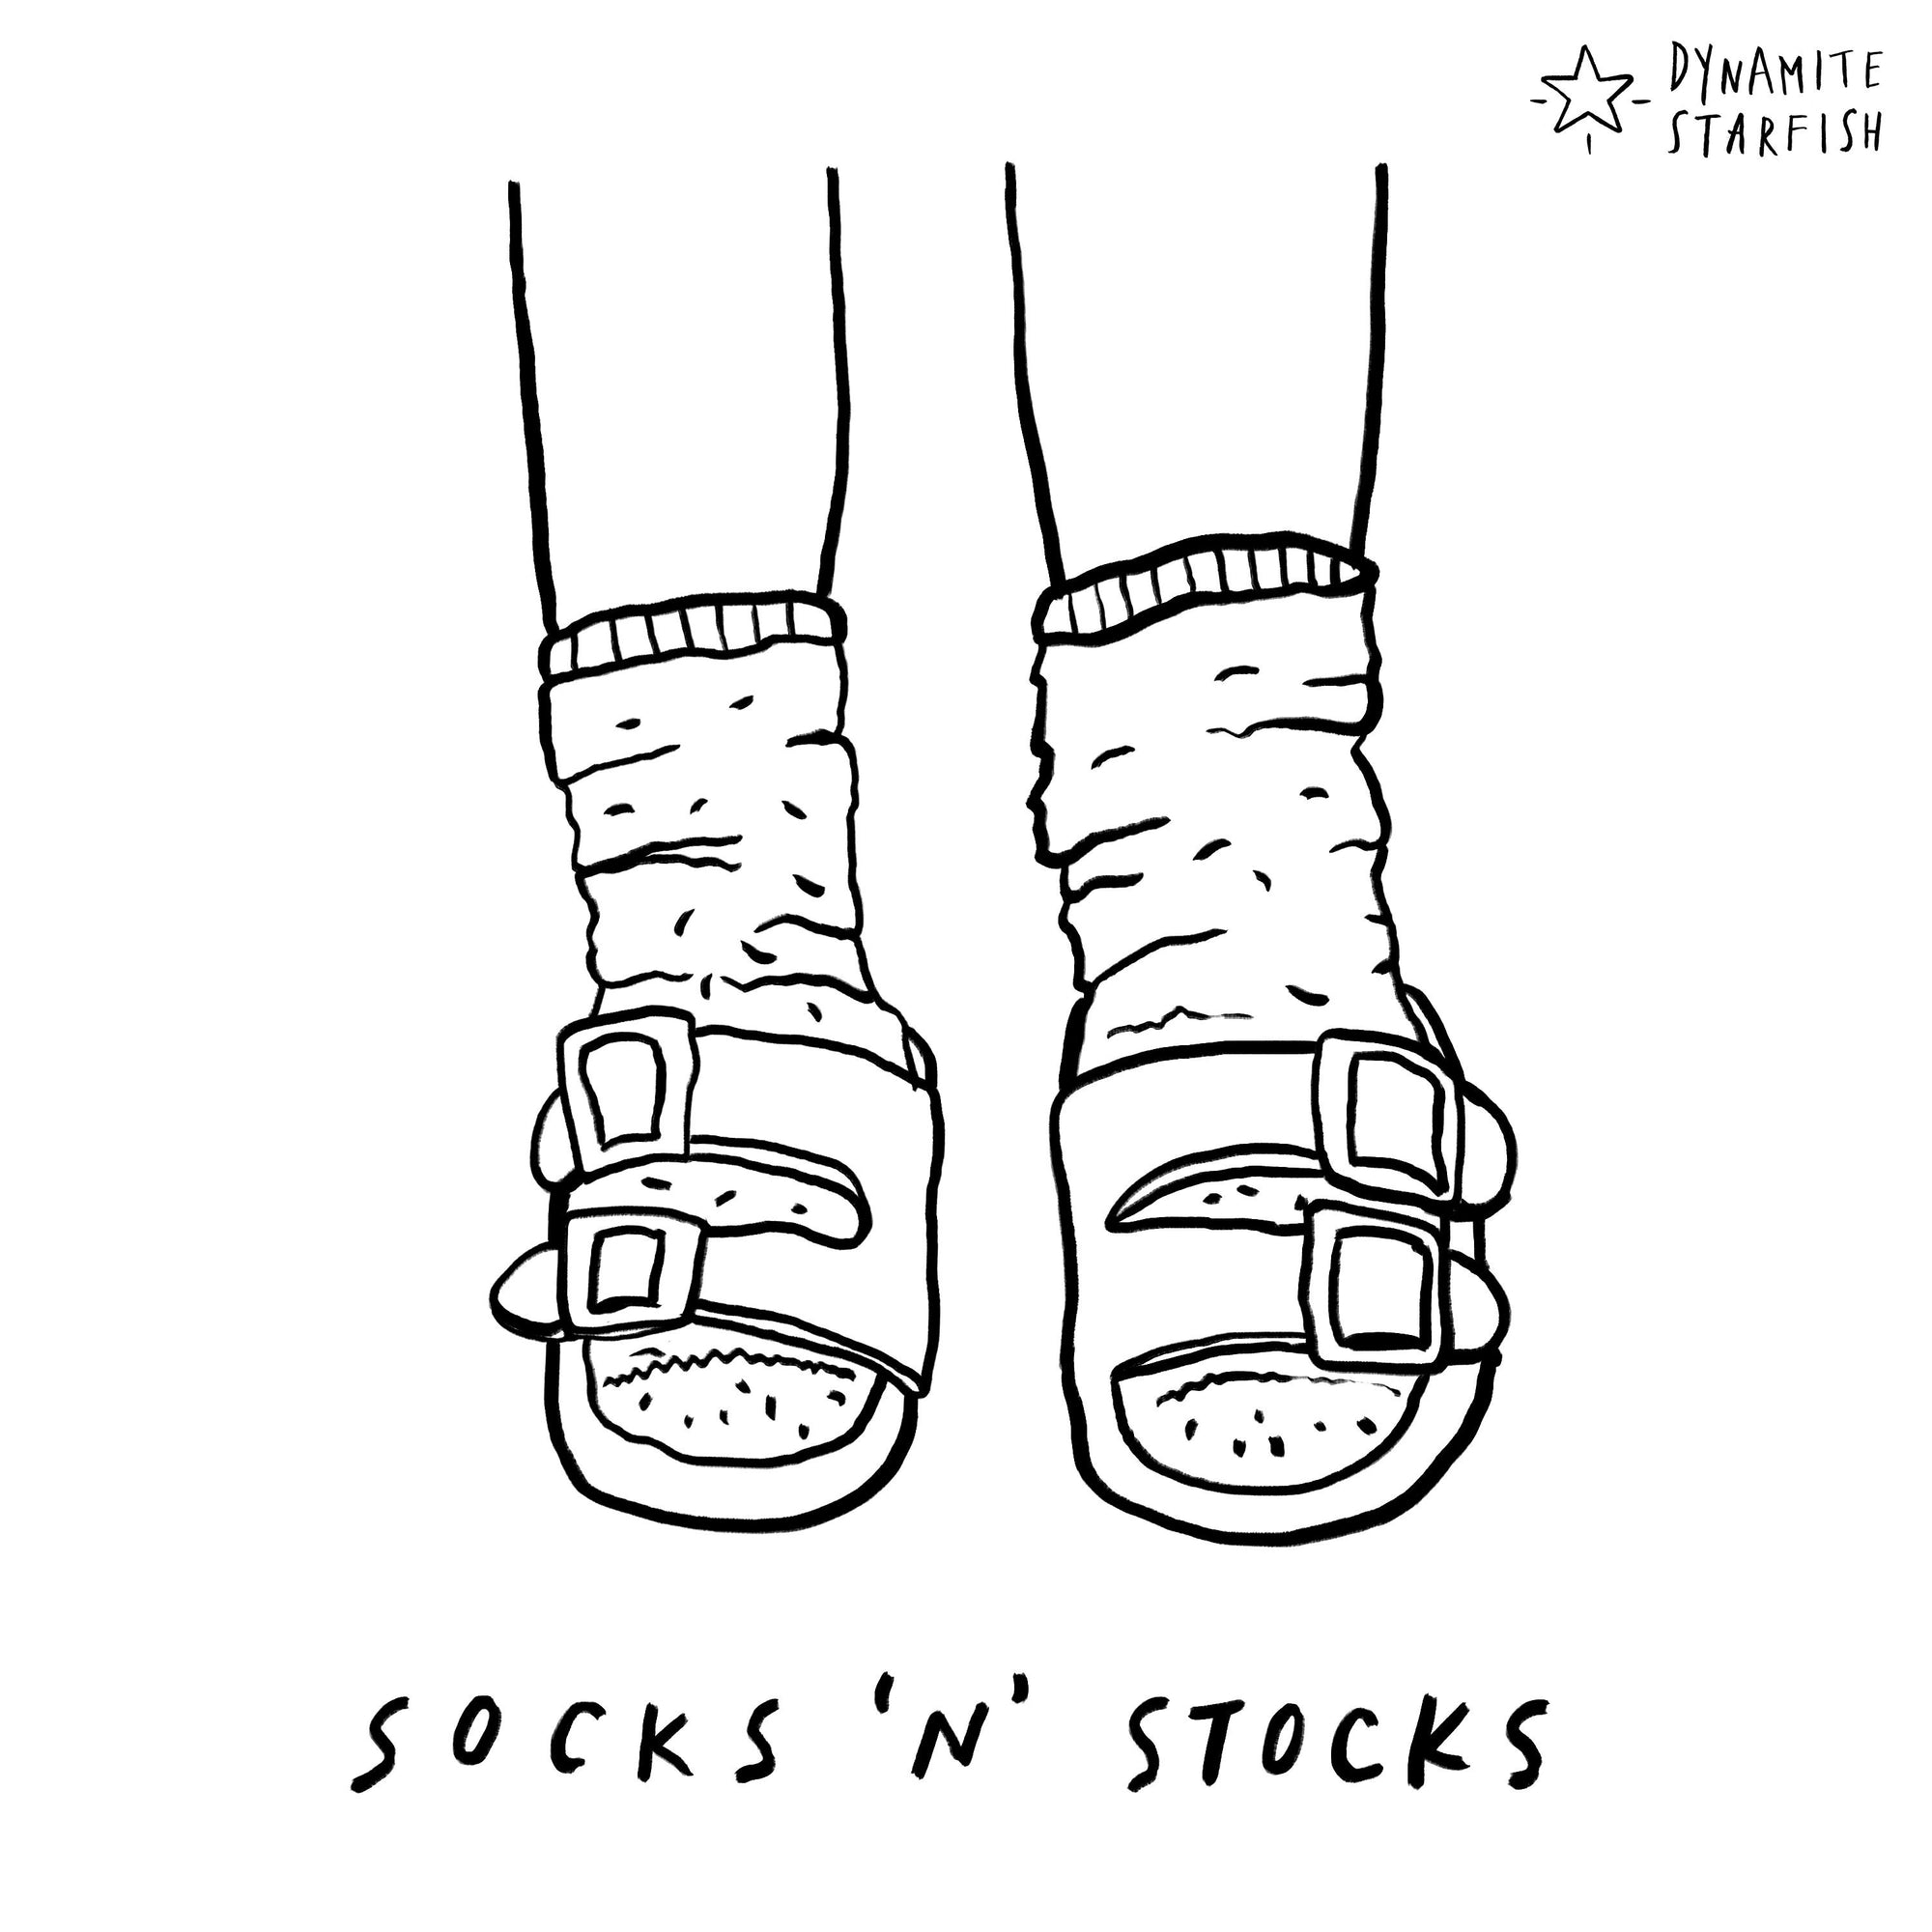 100 Drawings about Climbing — Socks 'n' Stocks - Dynamite Starfish